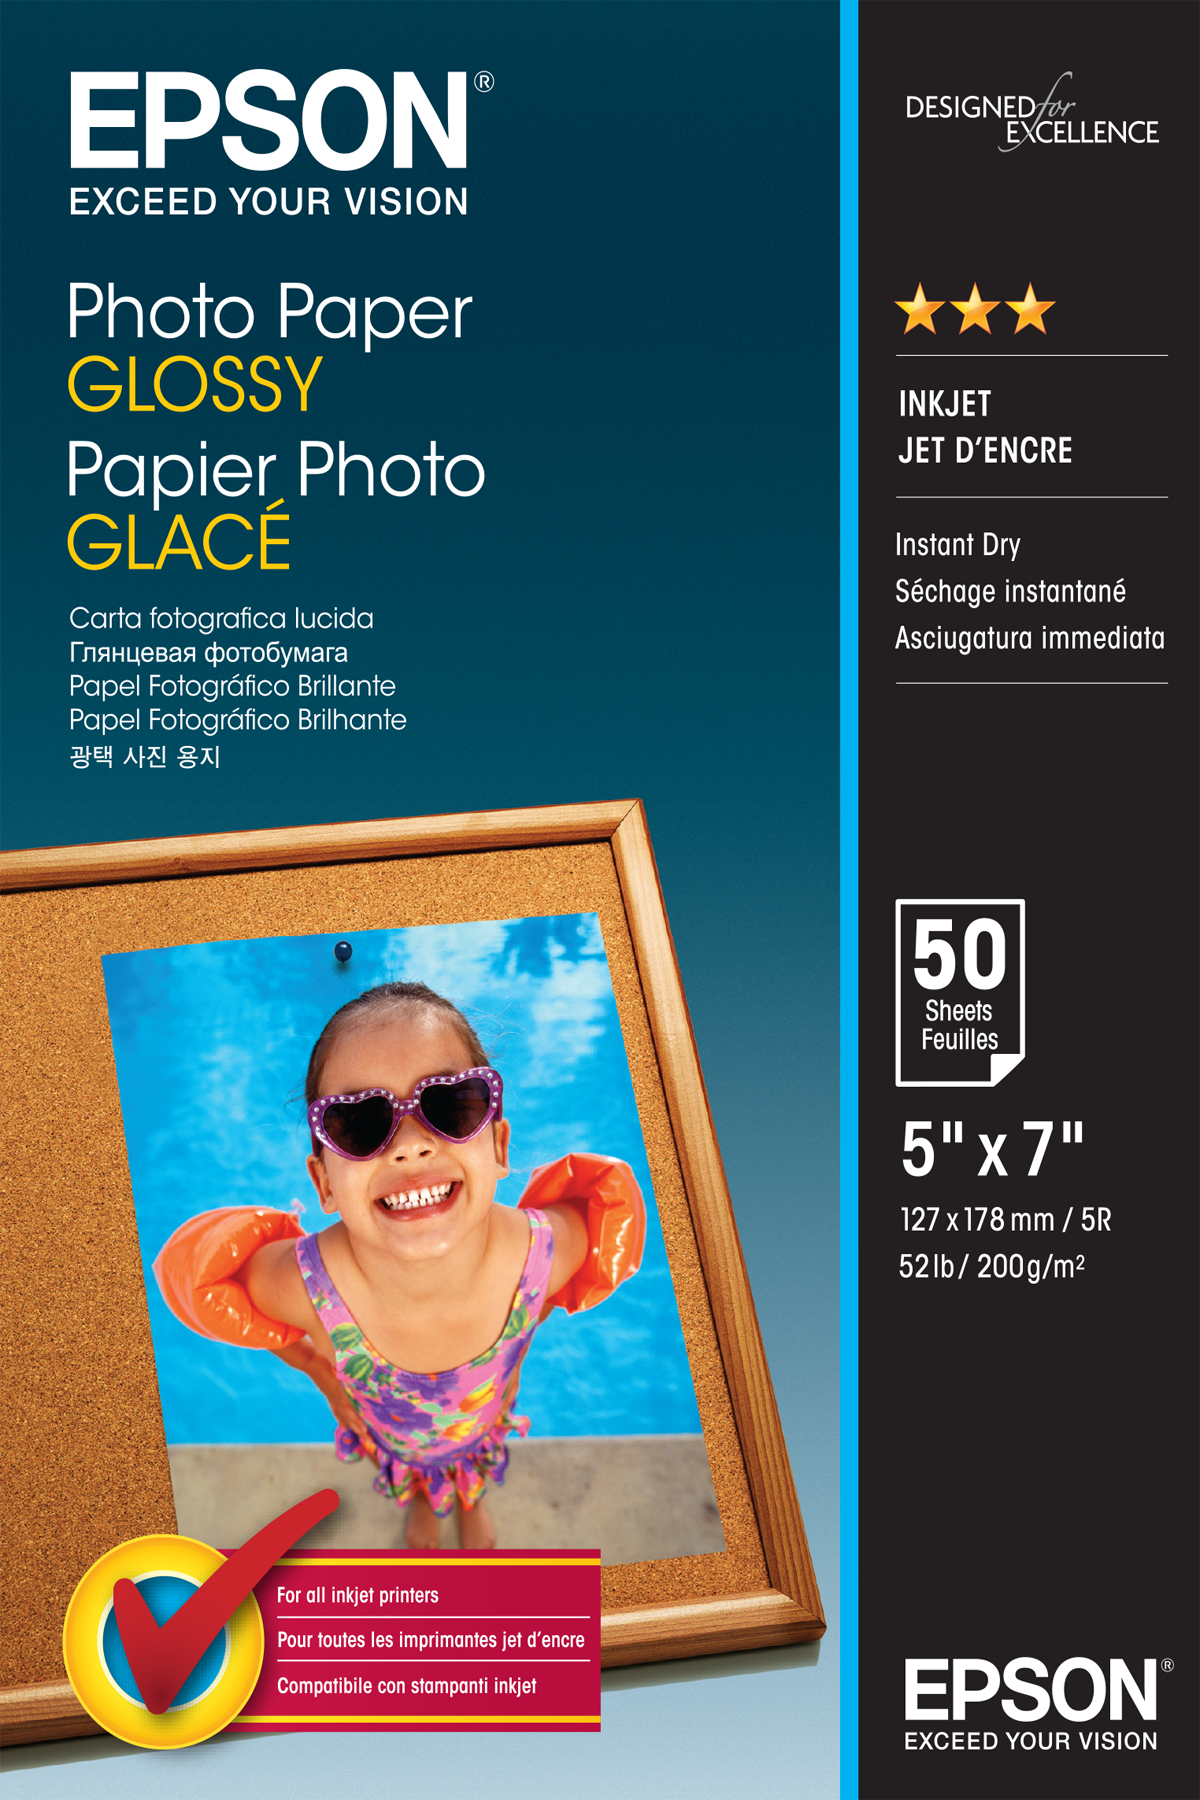 Photo Paper Glossy 13 x 18 cm 200 g/m²